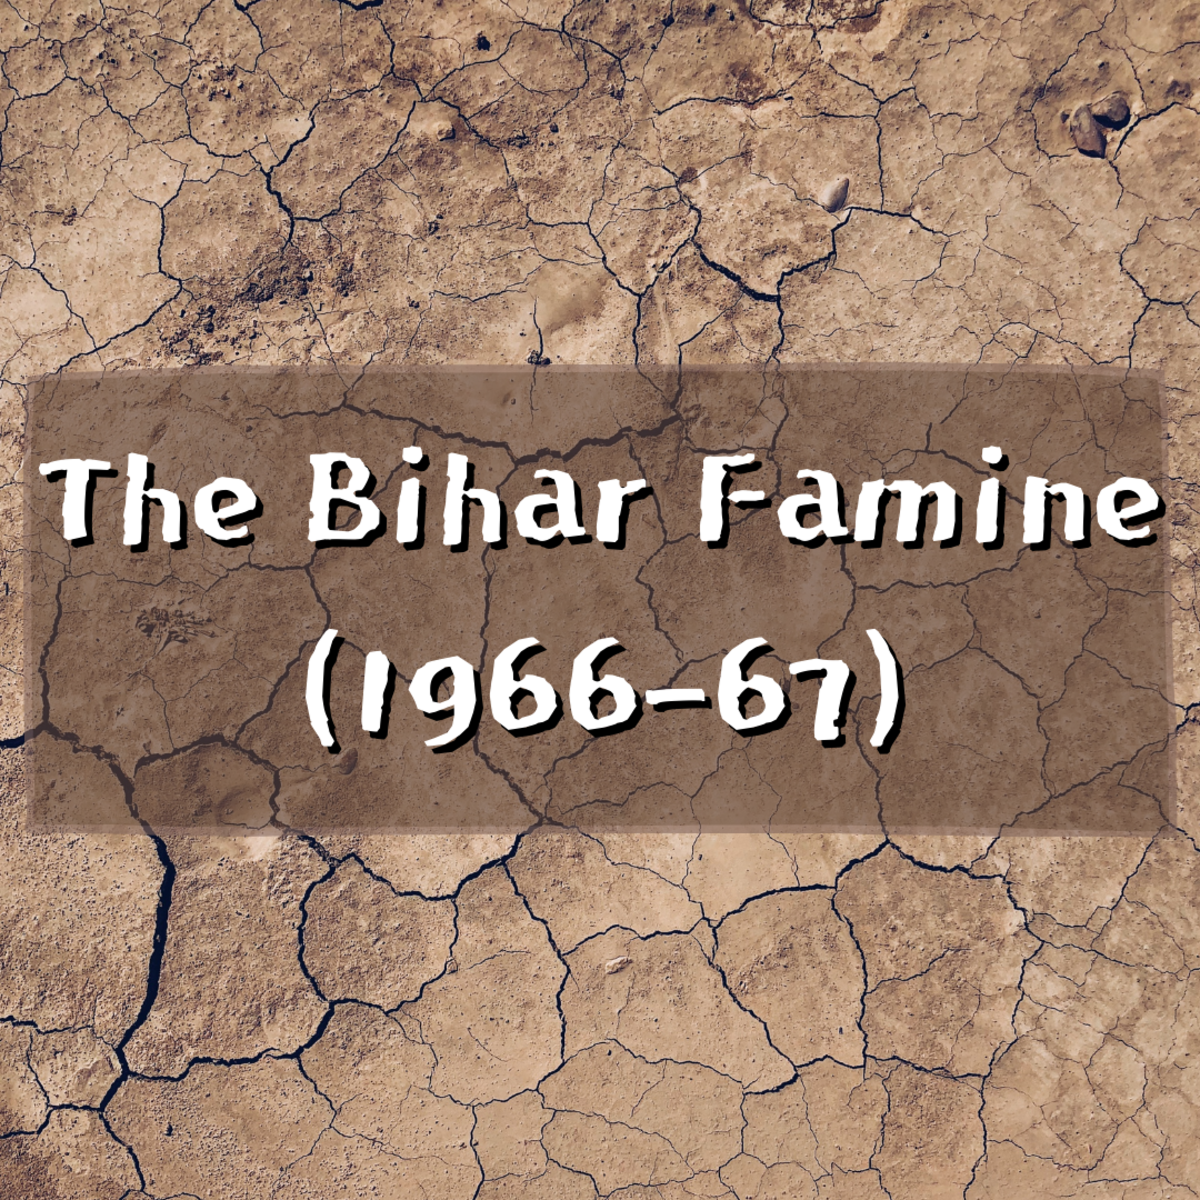 The Bihar Famine (1966-67): Beyond Politics, Aid and Diplomacy